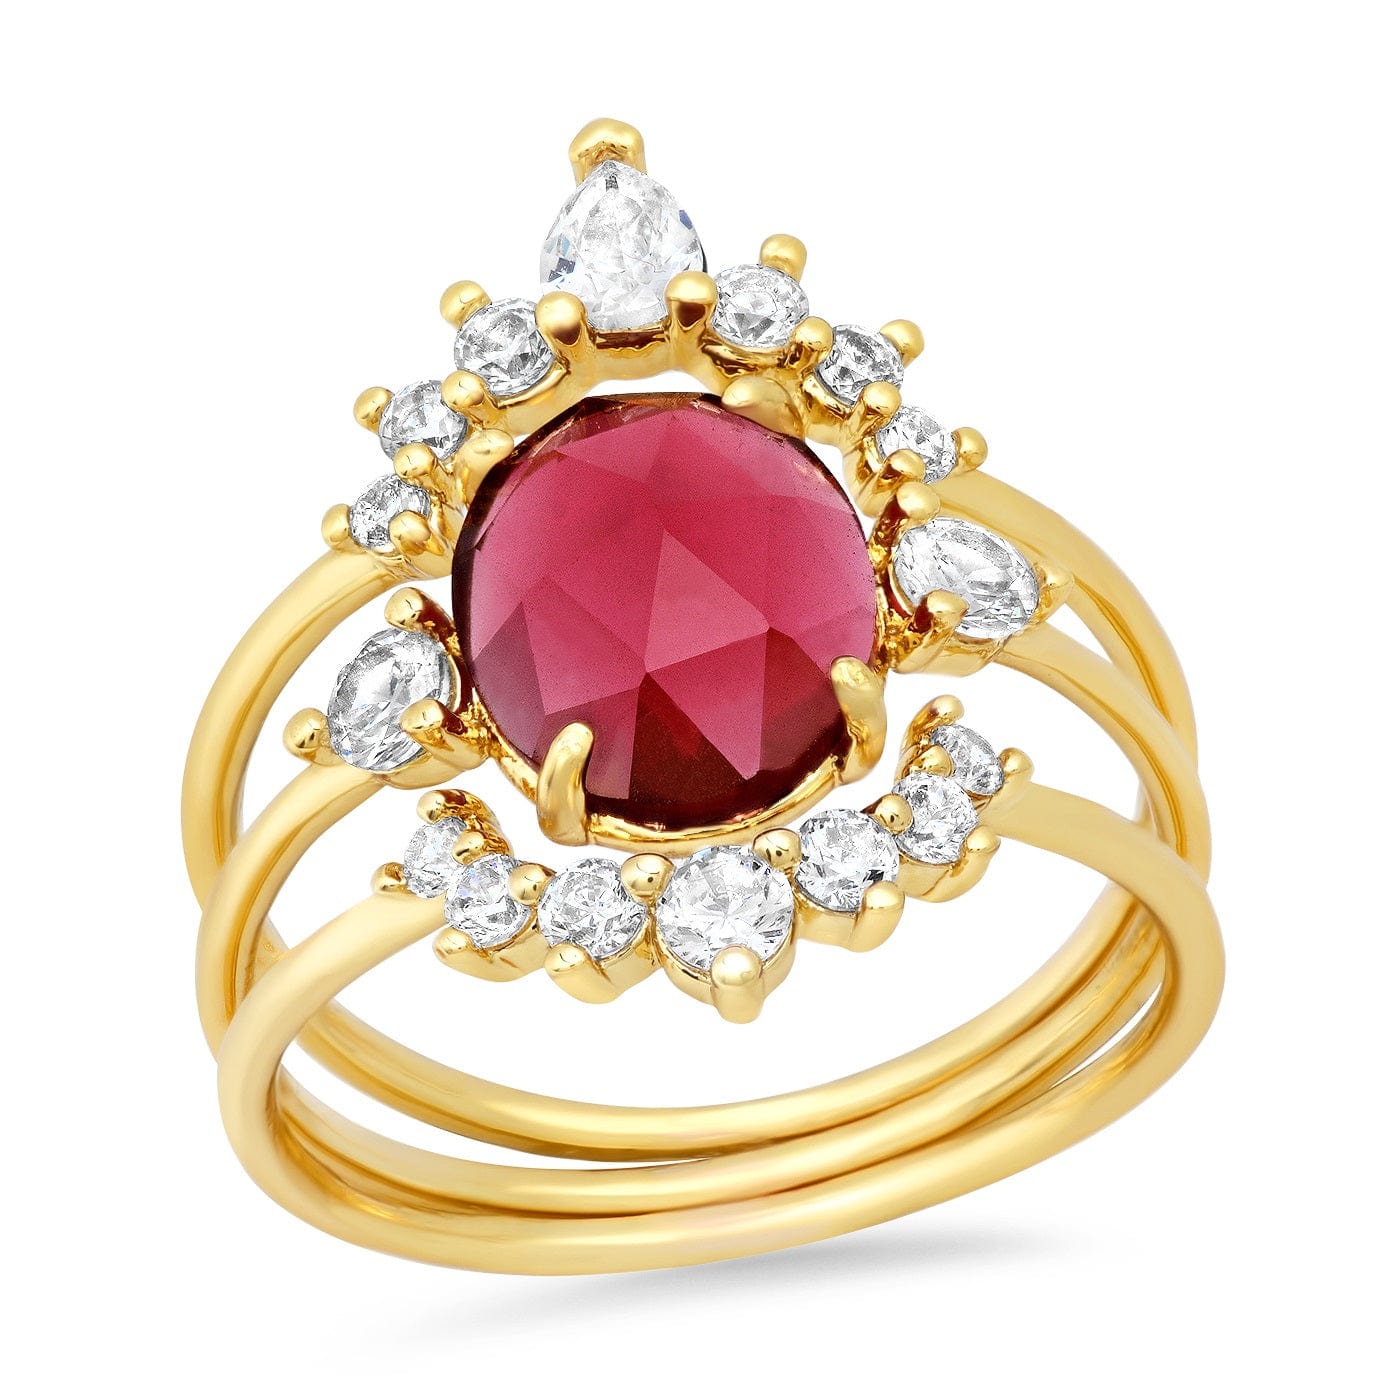 TAI JEWELRY Rings July / 6 Three Piece Vintage Inspired Birthstone Ring